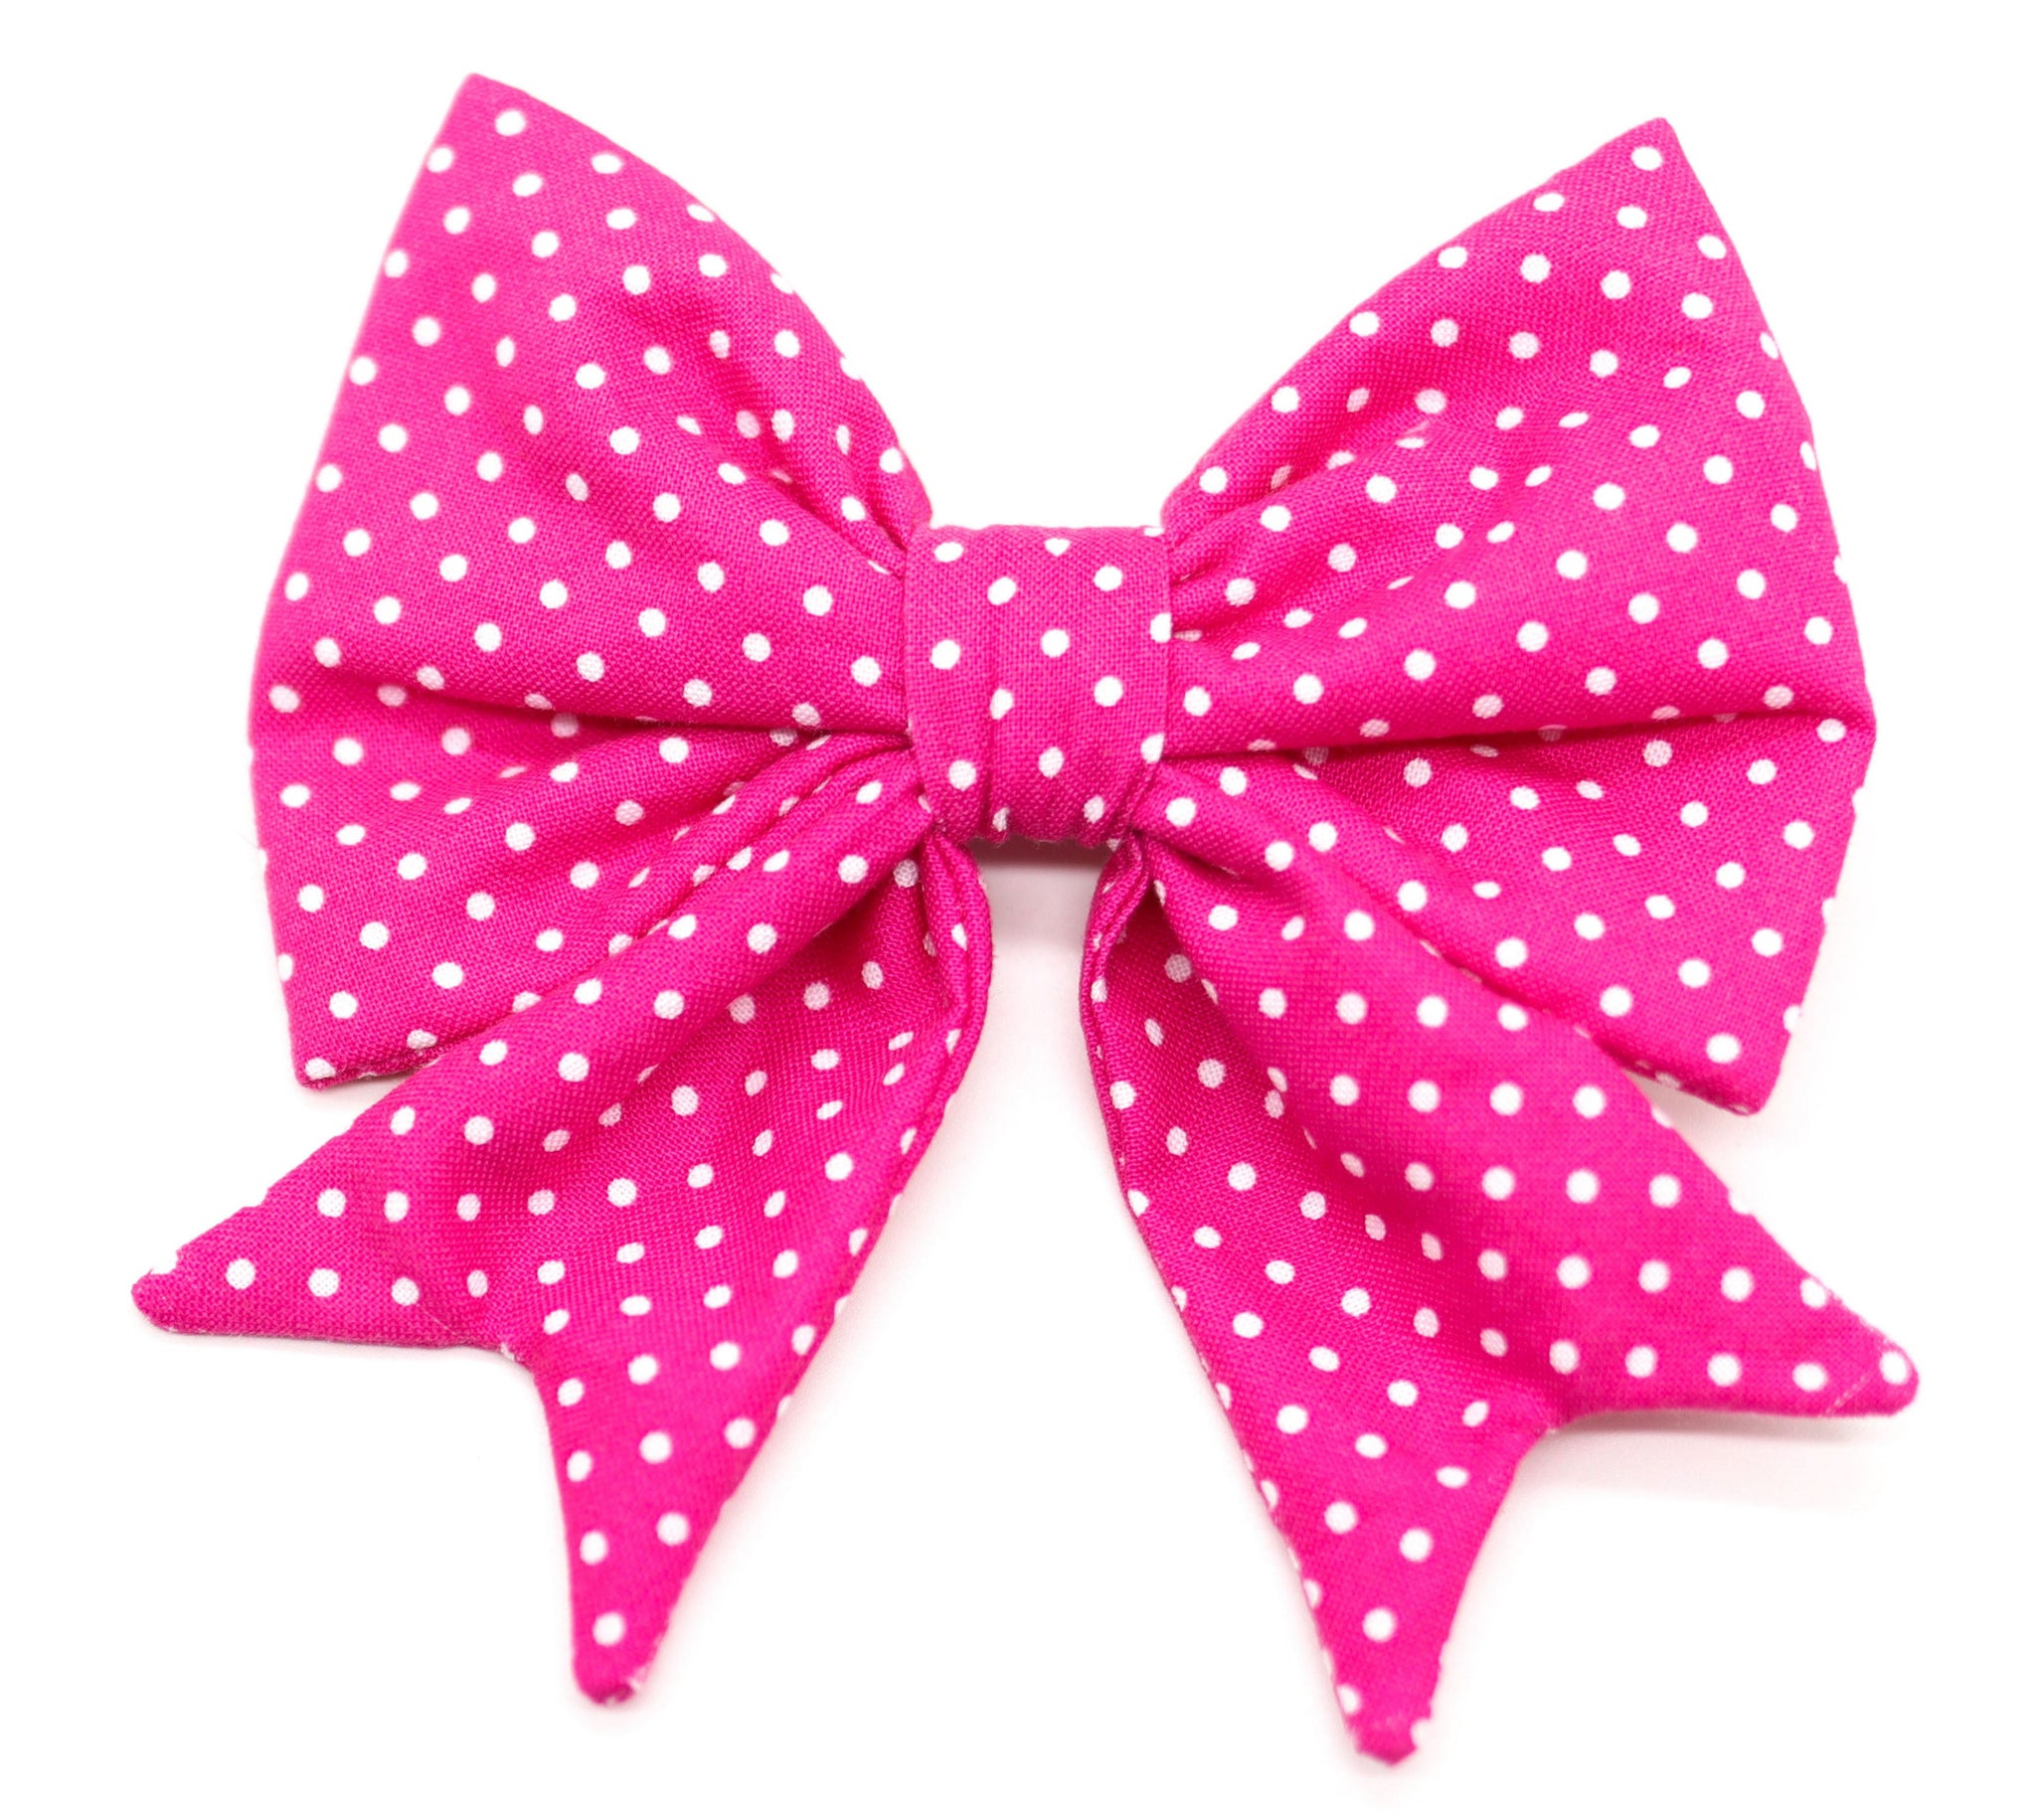 "Pink Polkadot" sailor bow for dog collars